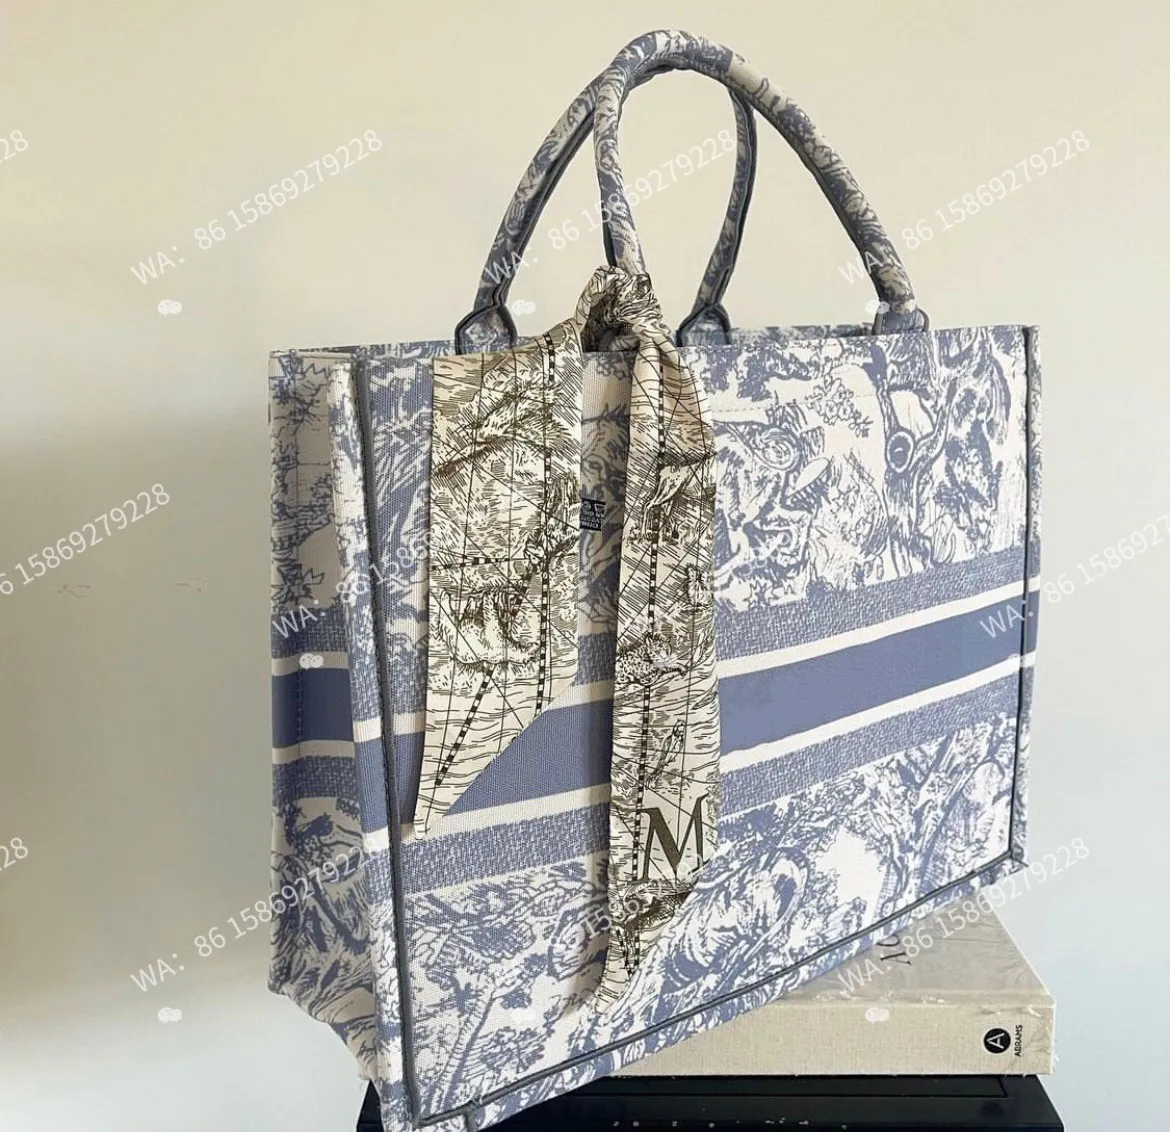 Designer bags embroidery canvas italian handbags Luxury women hand bag 2021 latest purse and handbags